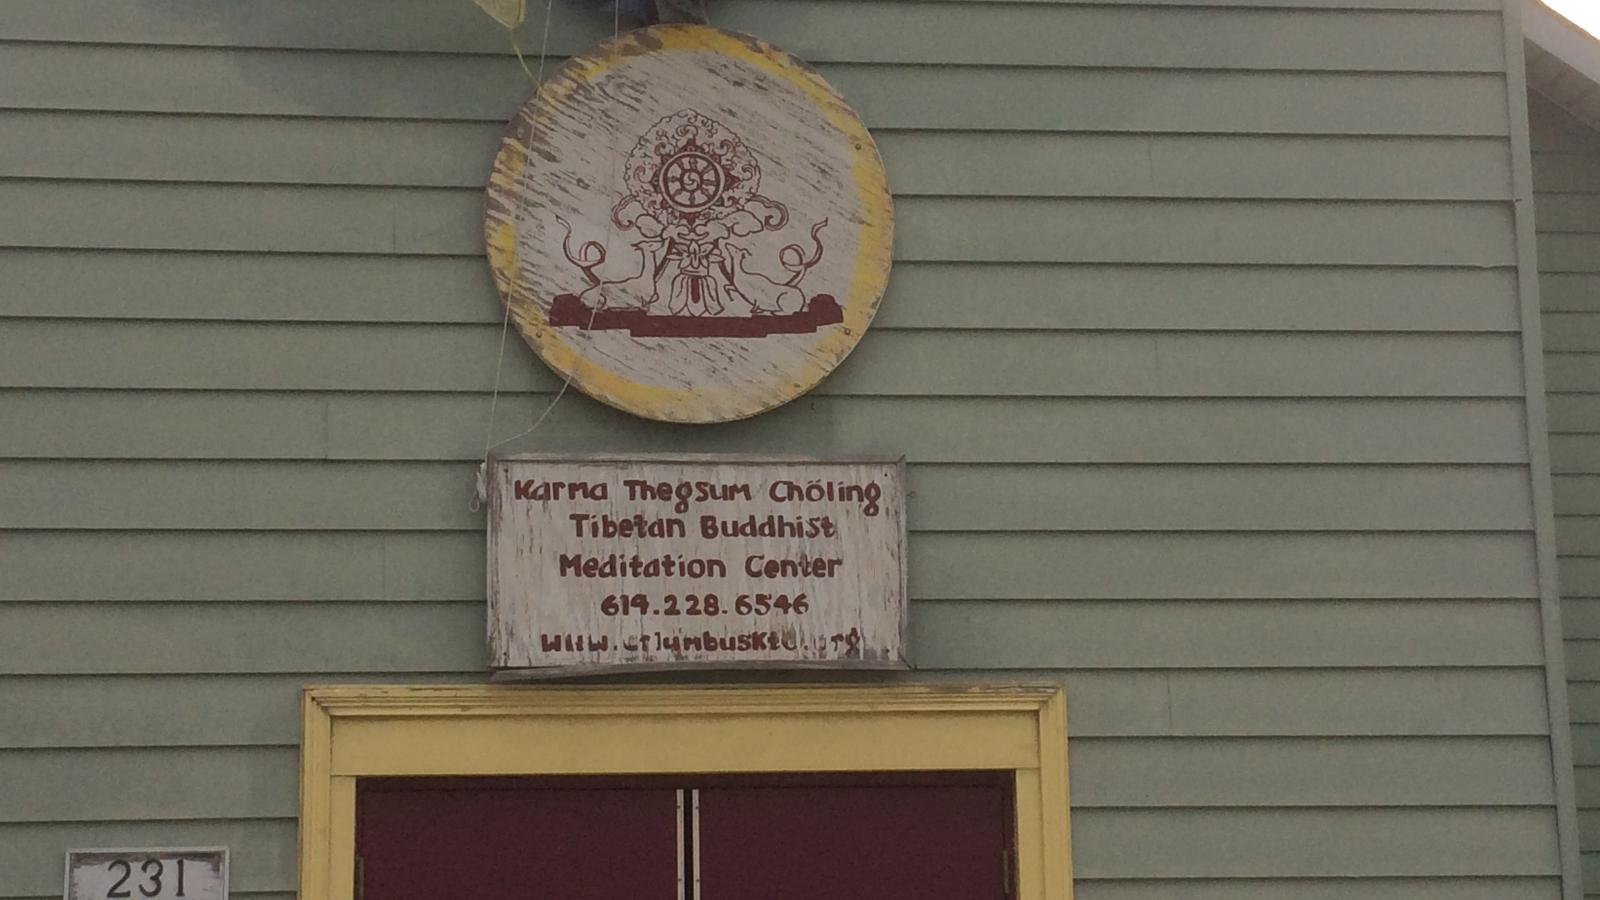 Karma Thegsum Choling Meditation Center entrance